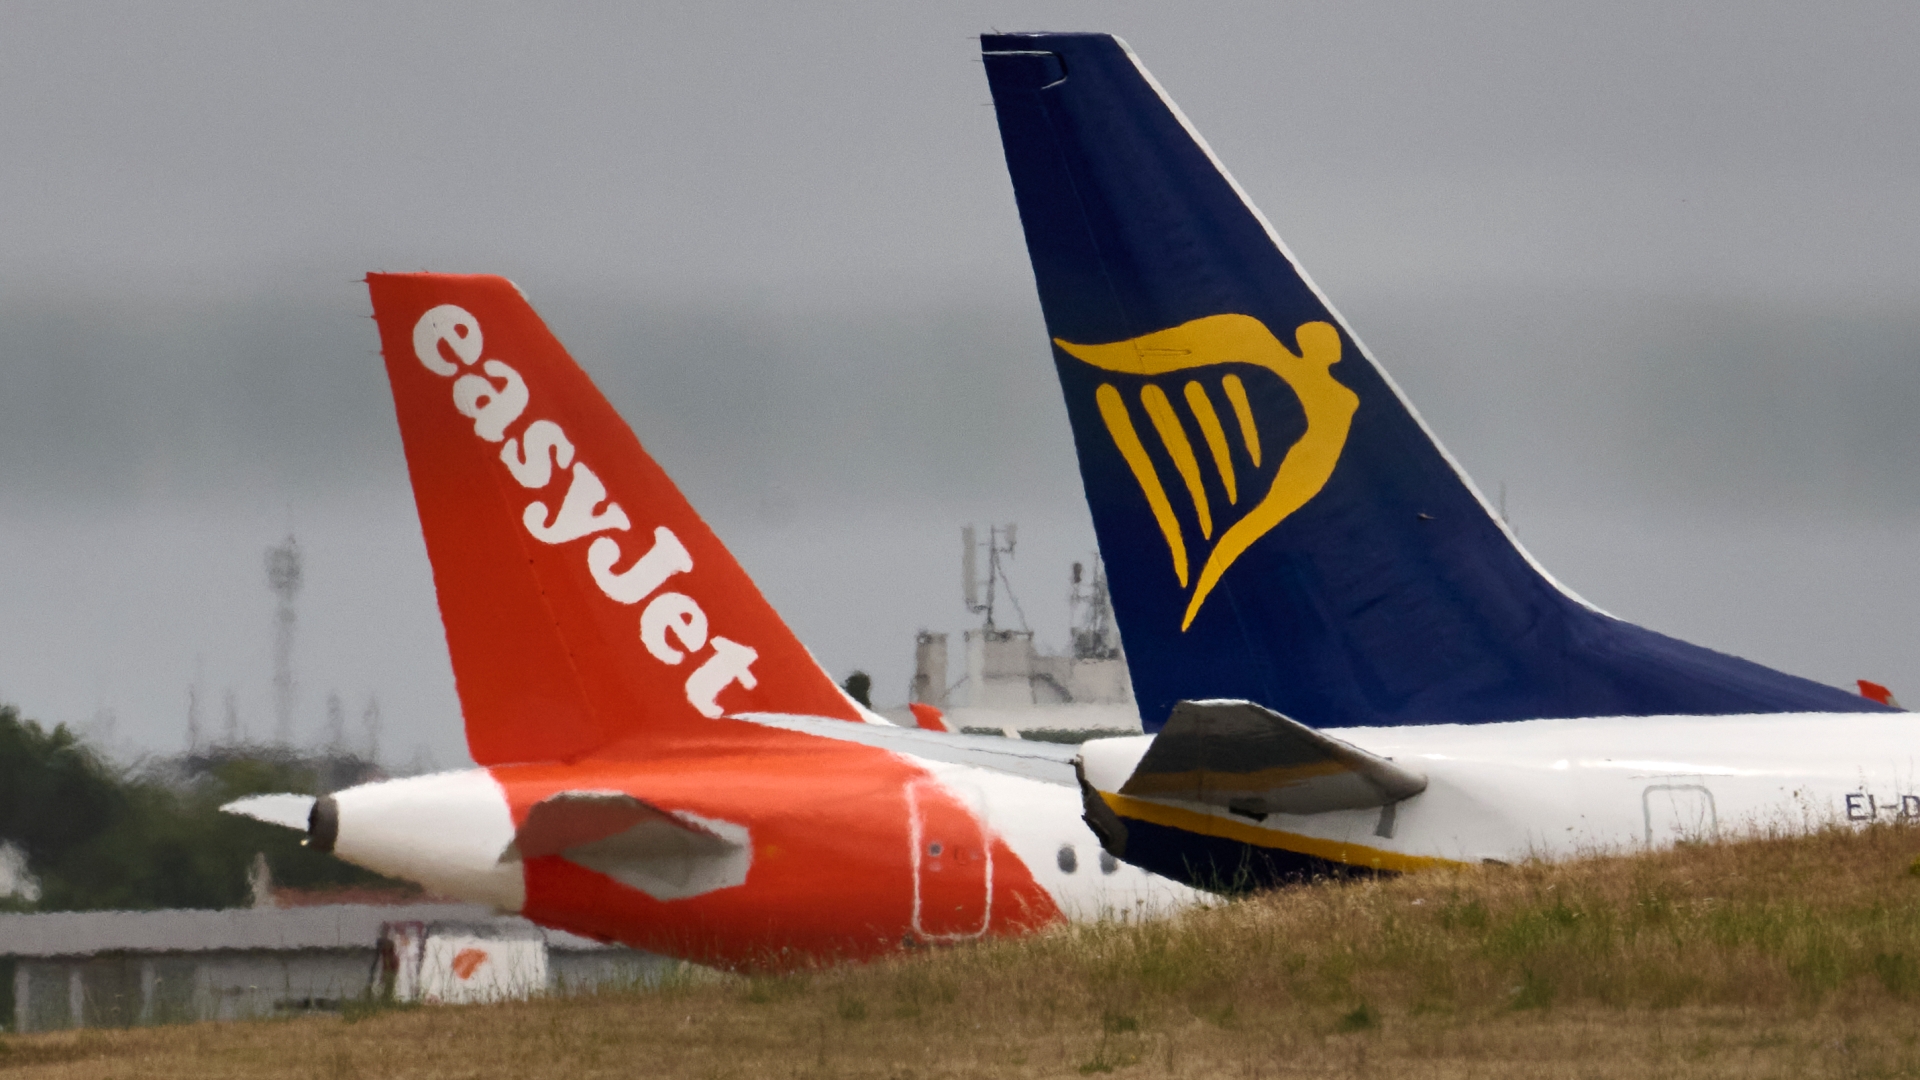 Disruption to flights across Europe this autumn due to strikes